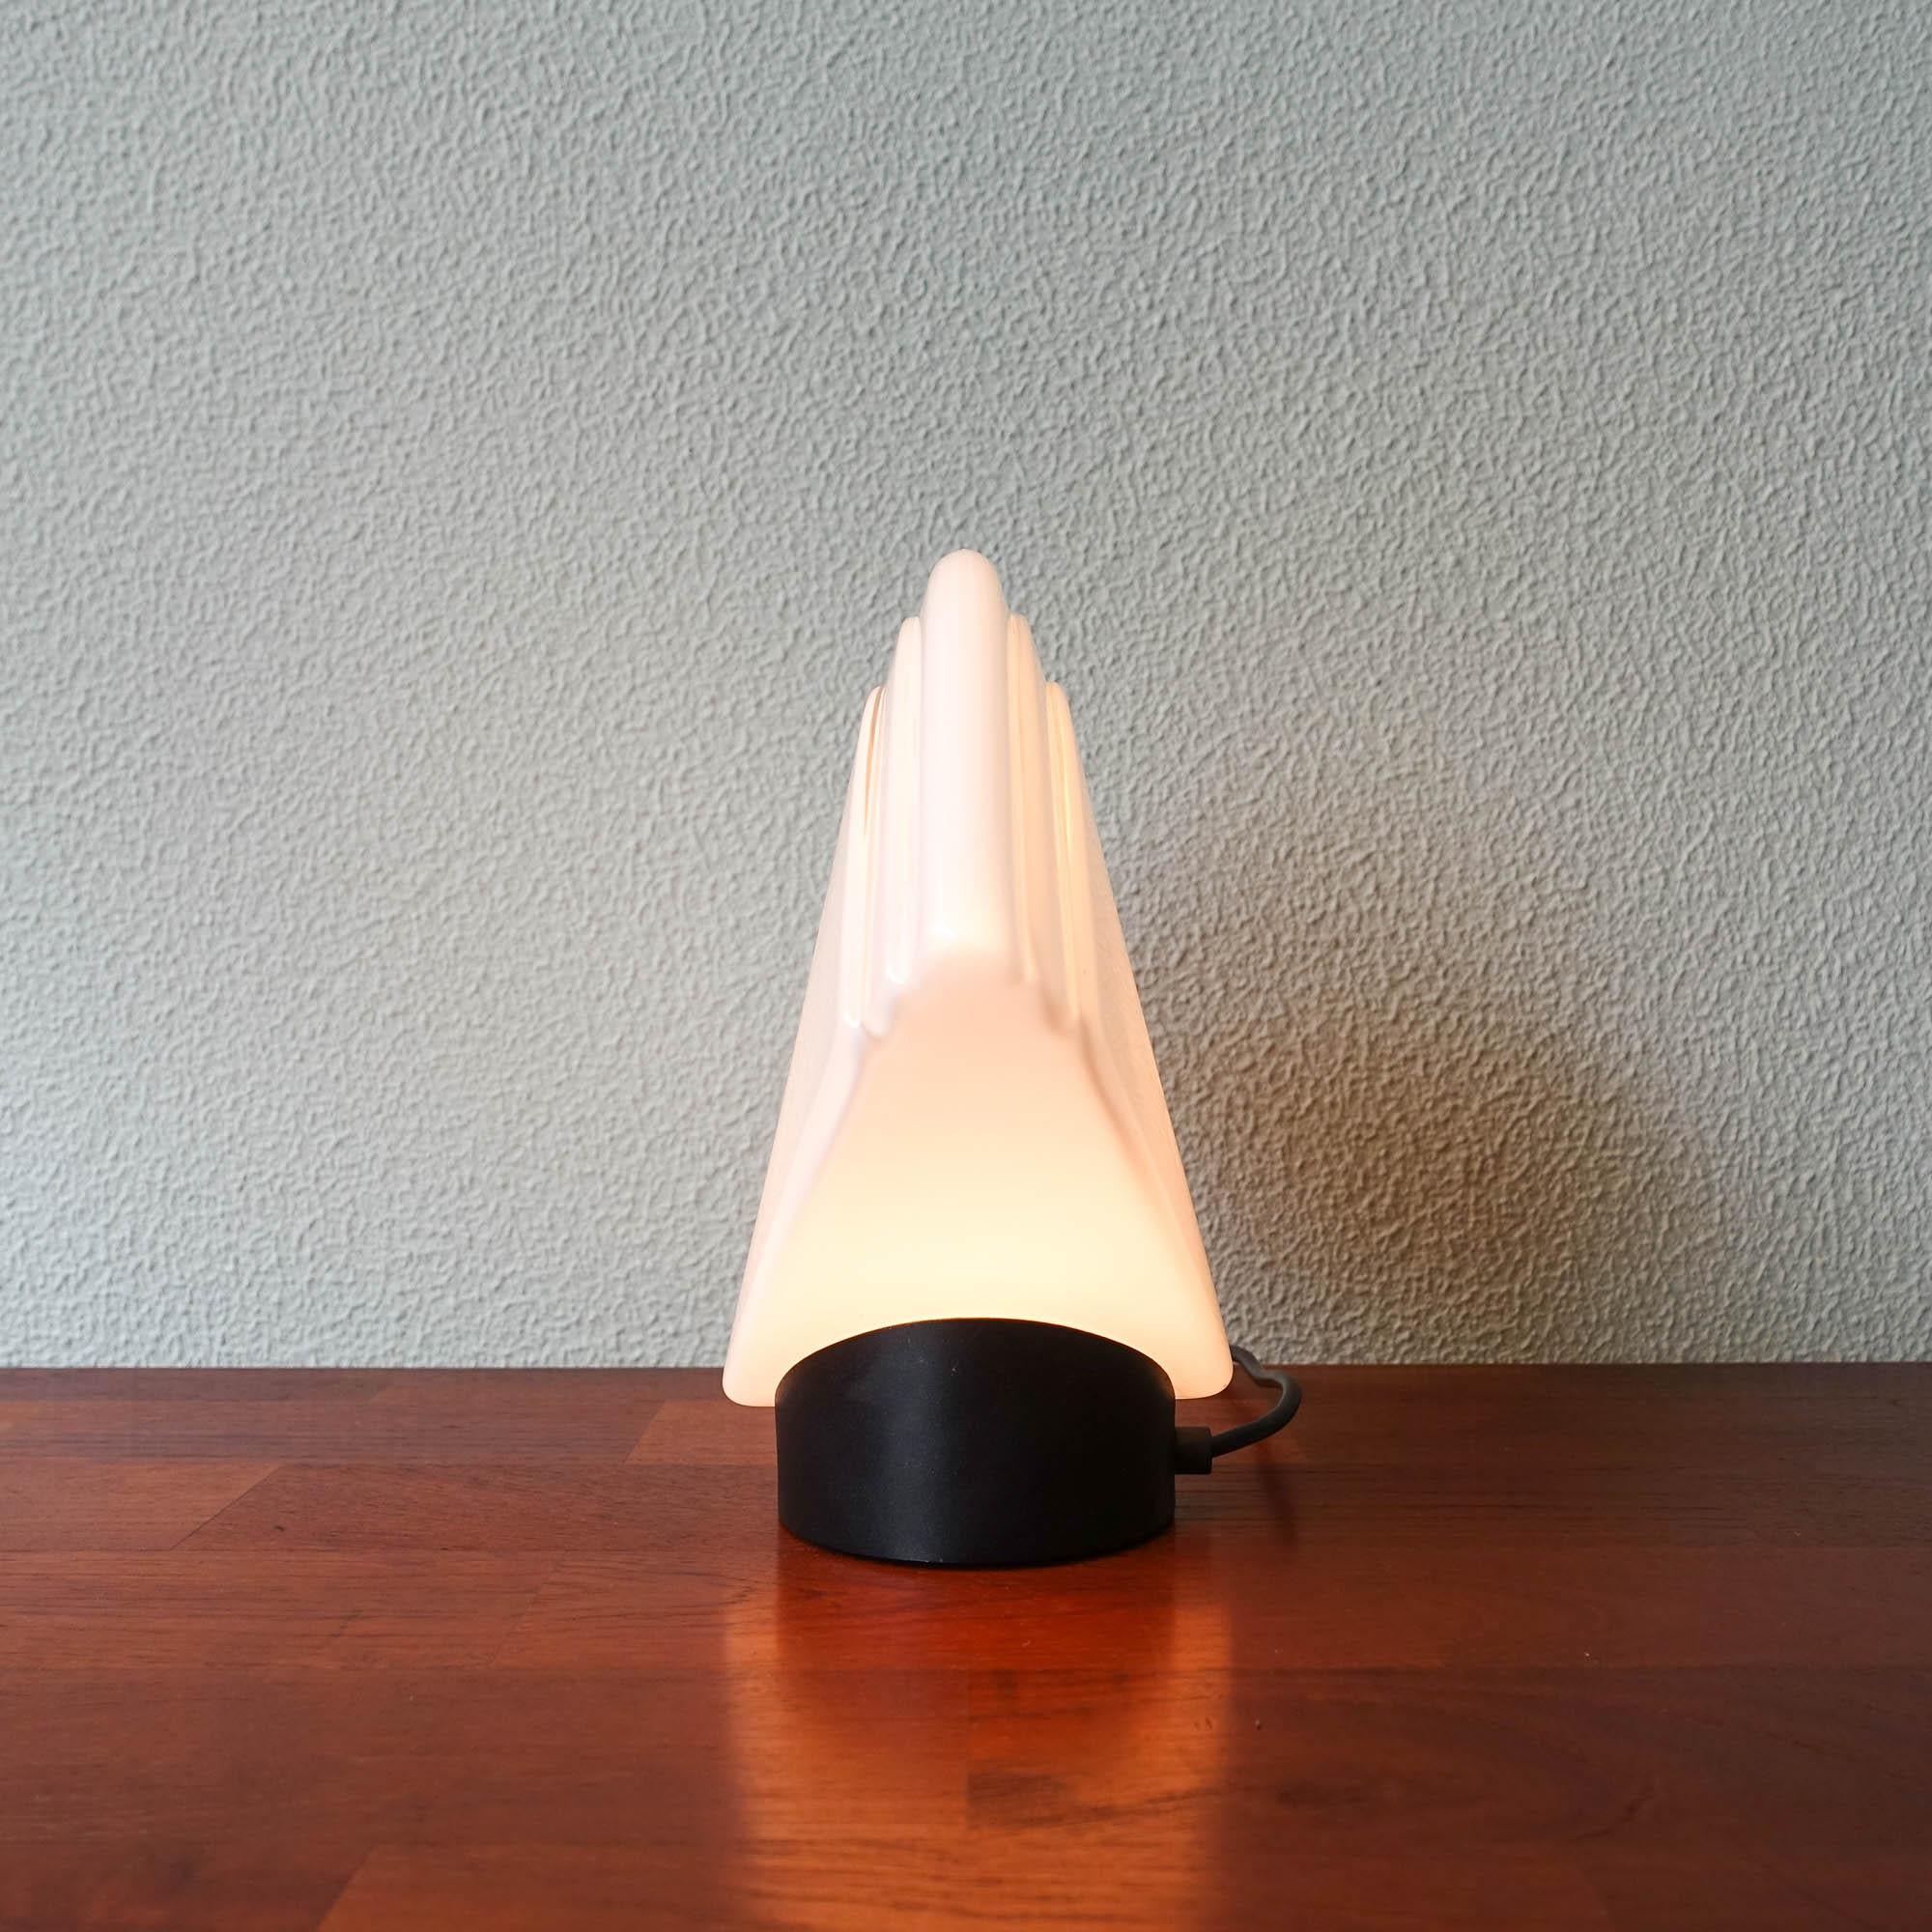 Fan-Shaped AV Mazzega Murano Glass Table Lamp, 1970s For Sale 2